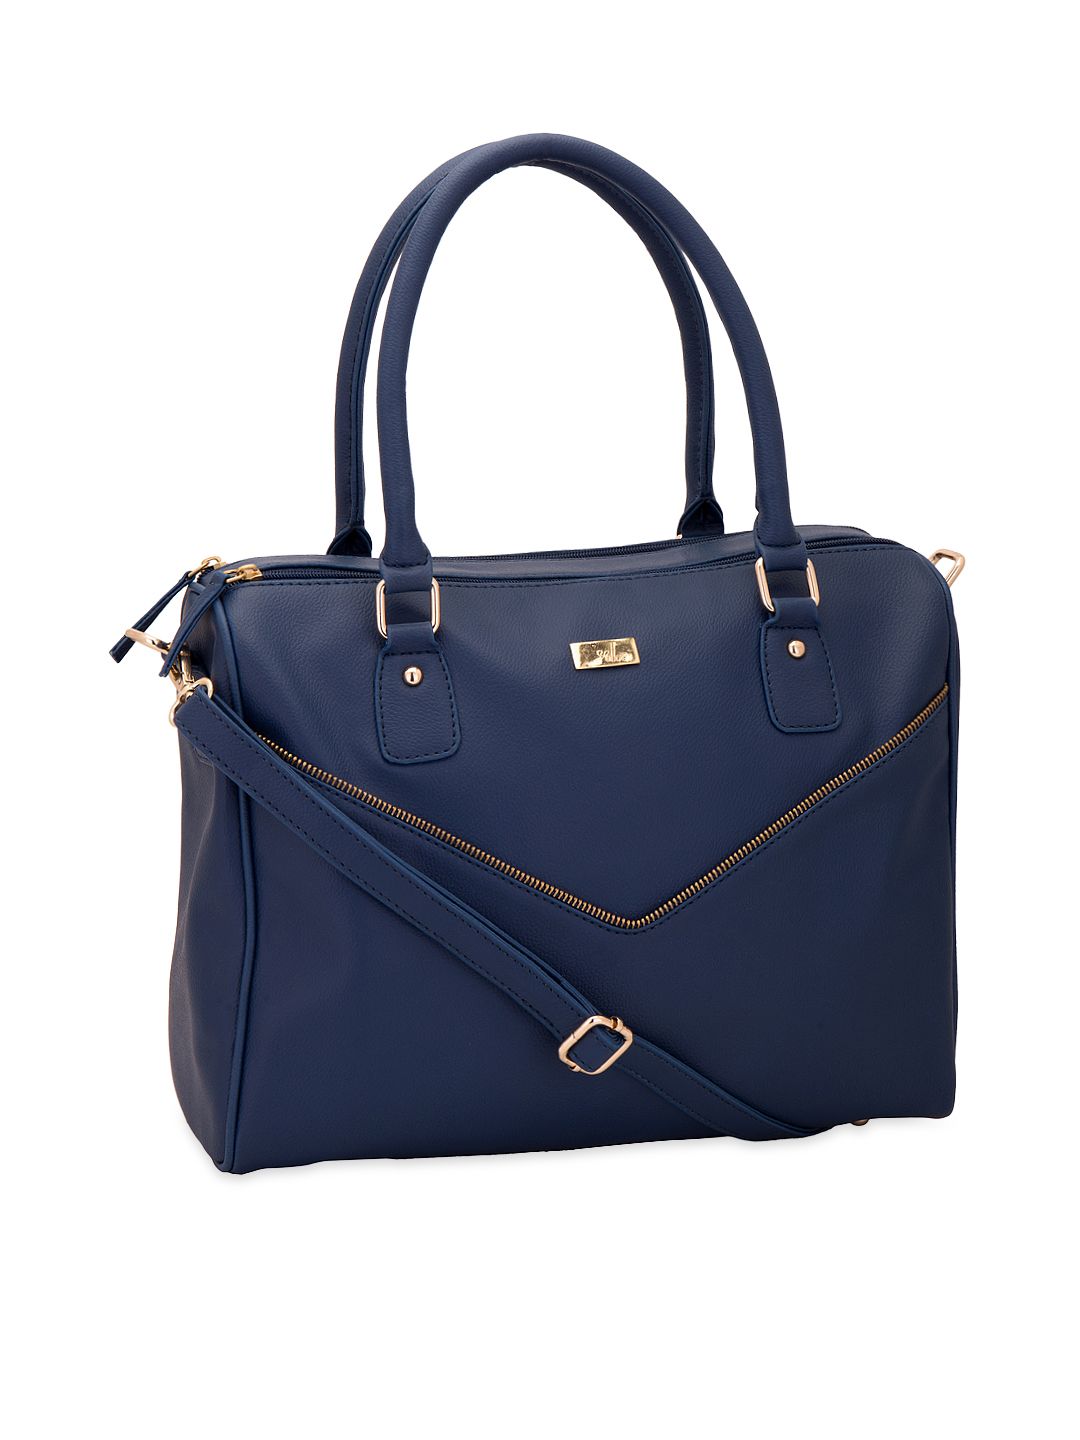 Wholesale Purses And Handbags In Los Angeles: Buy Large Handbags Online